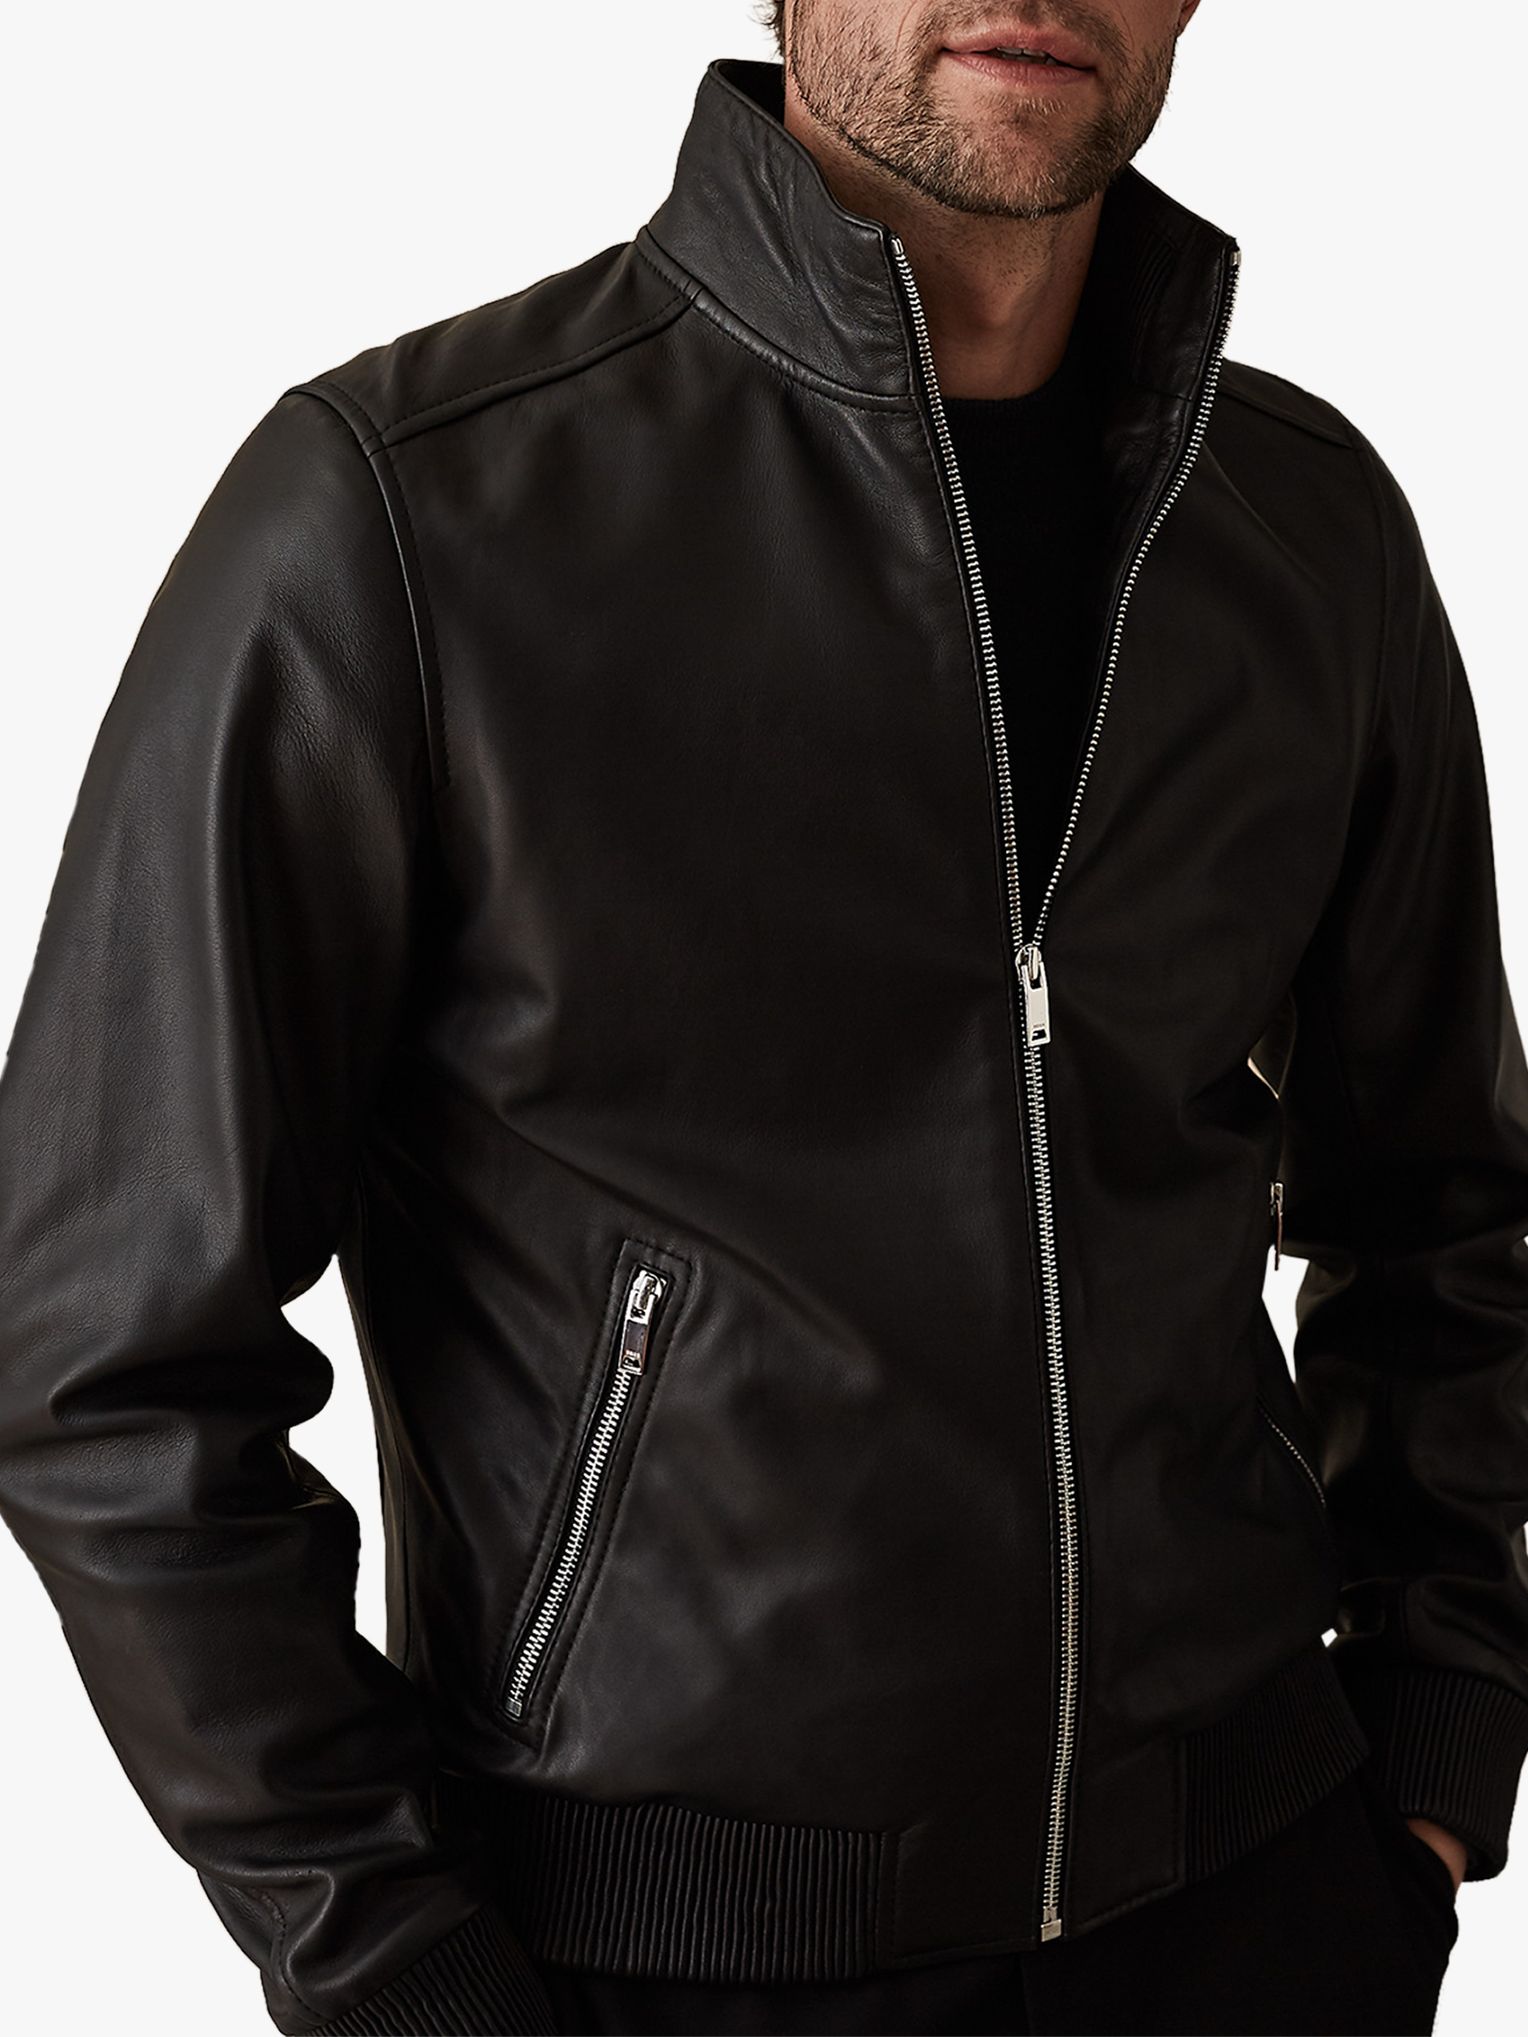 reiss mens leather jacket sale